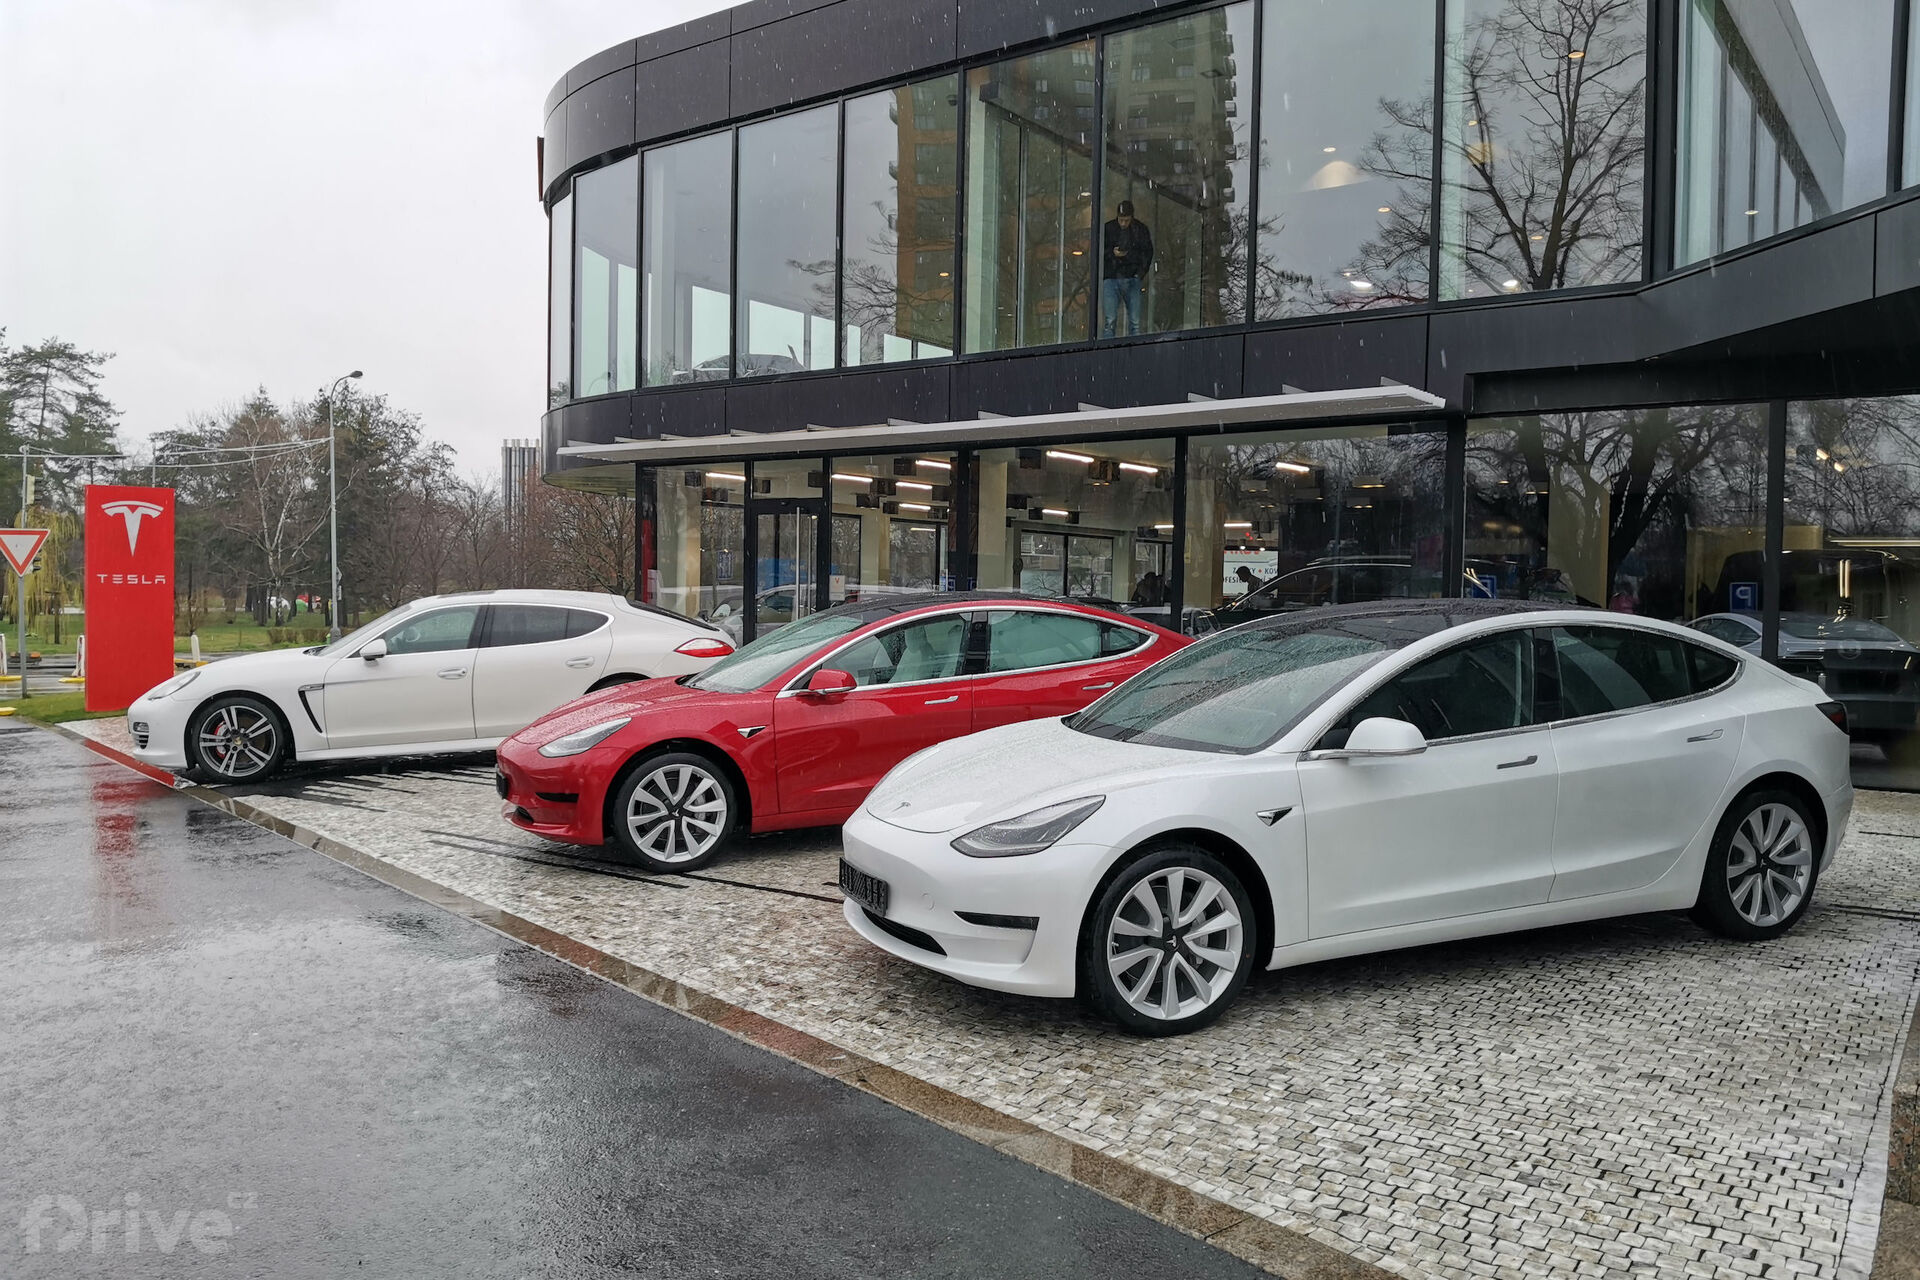 Tesla showroom v Praze